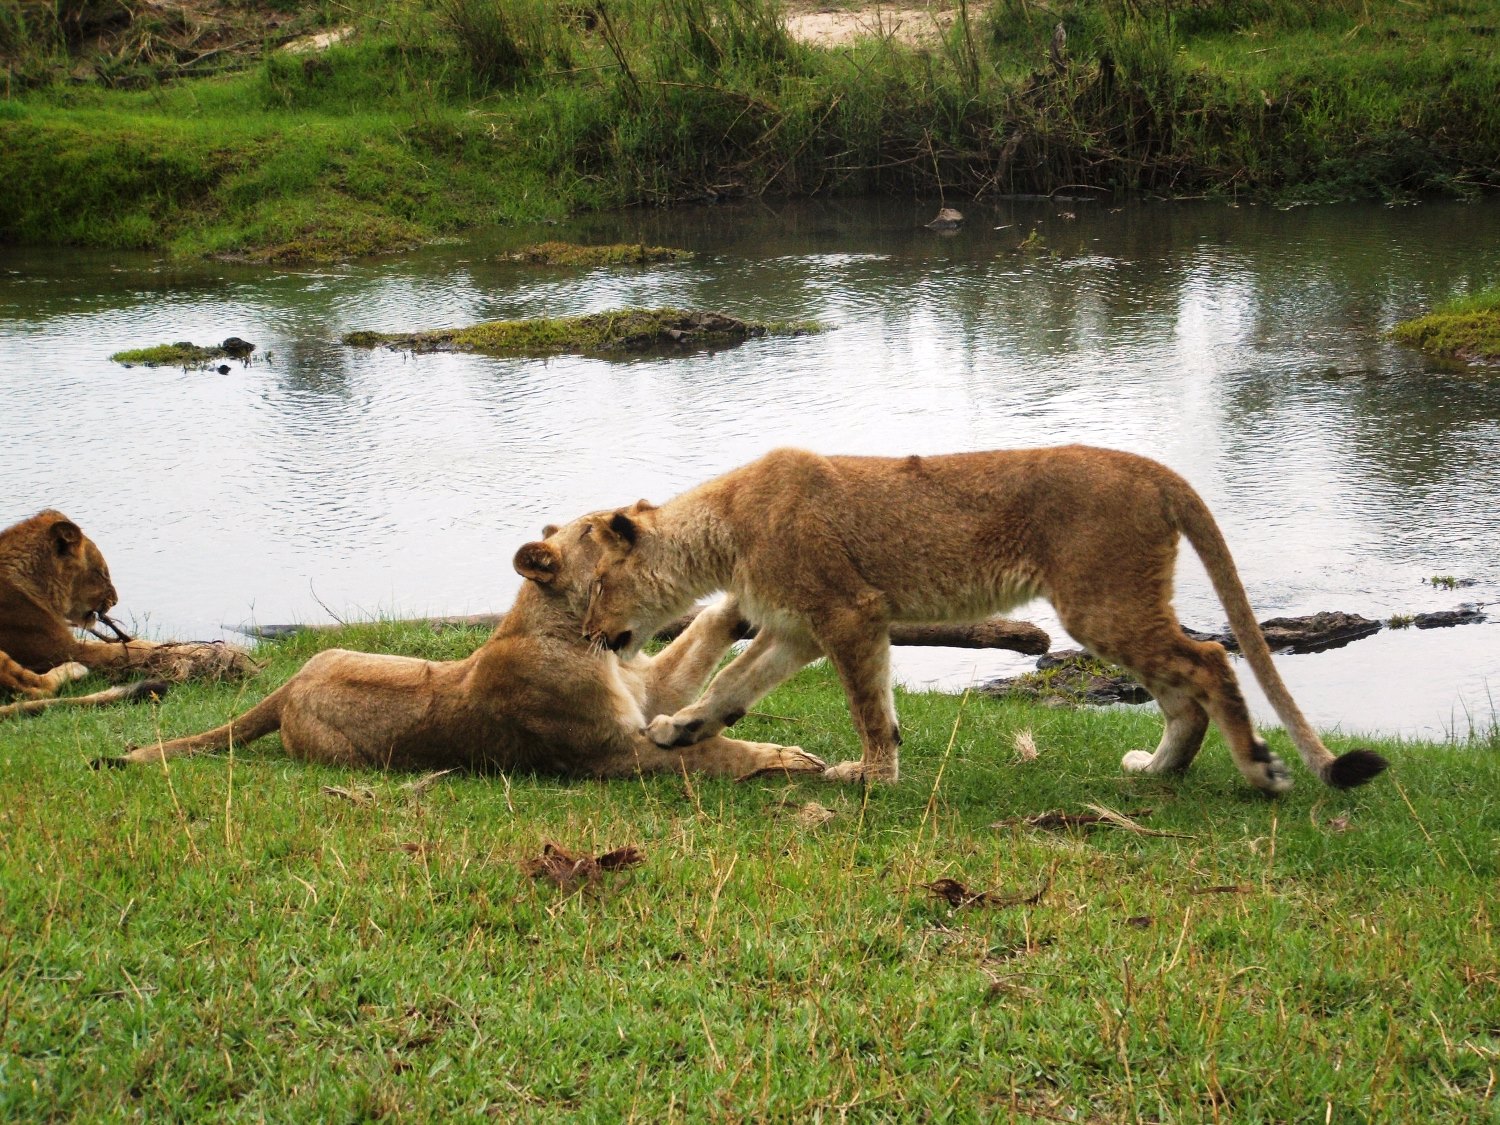  Lions in the rehabilitation phase of ALERT's reintroduction program.&nbsp;© Emma Dunston 